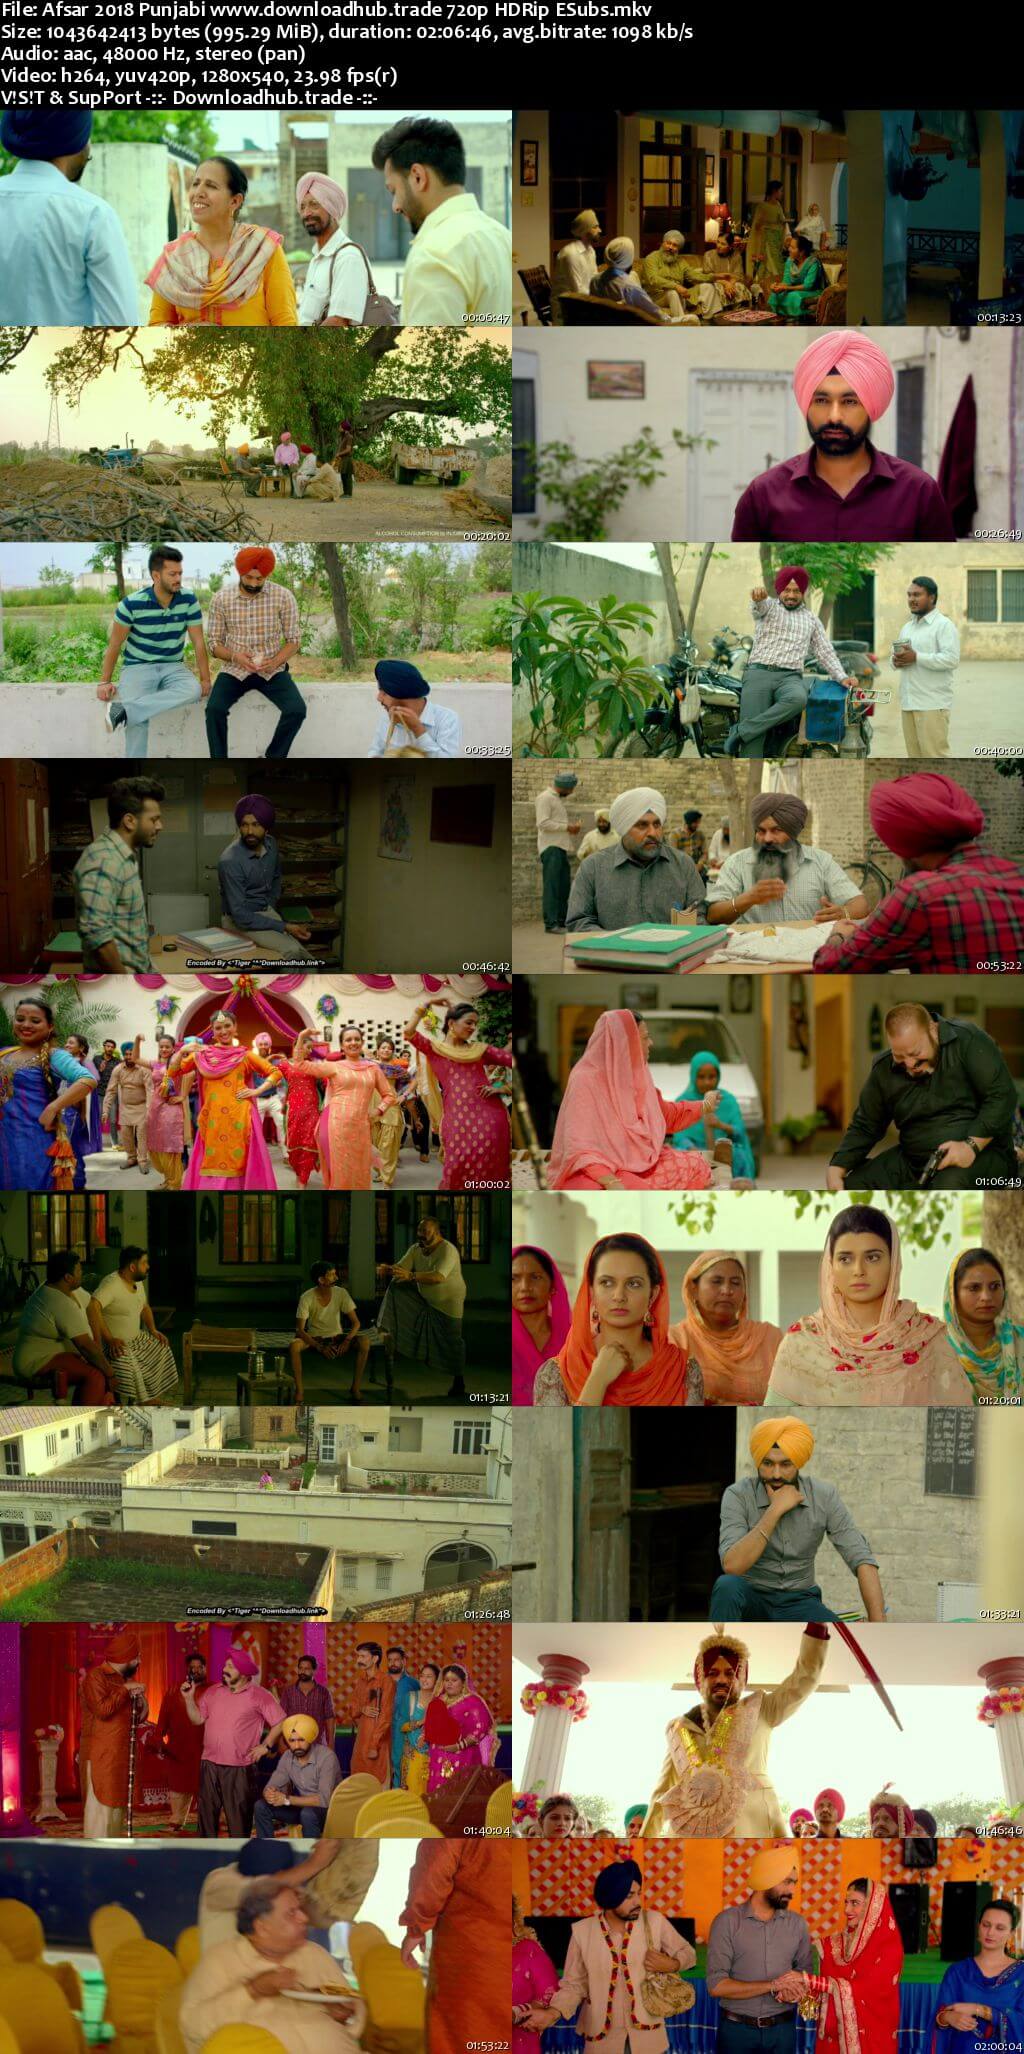 Afsar 2018 Punjabi 720p HDRip ESubs